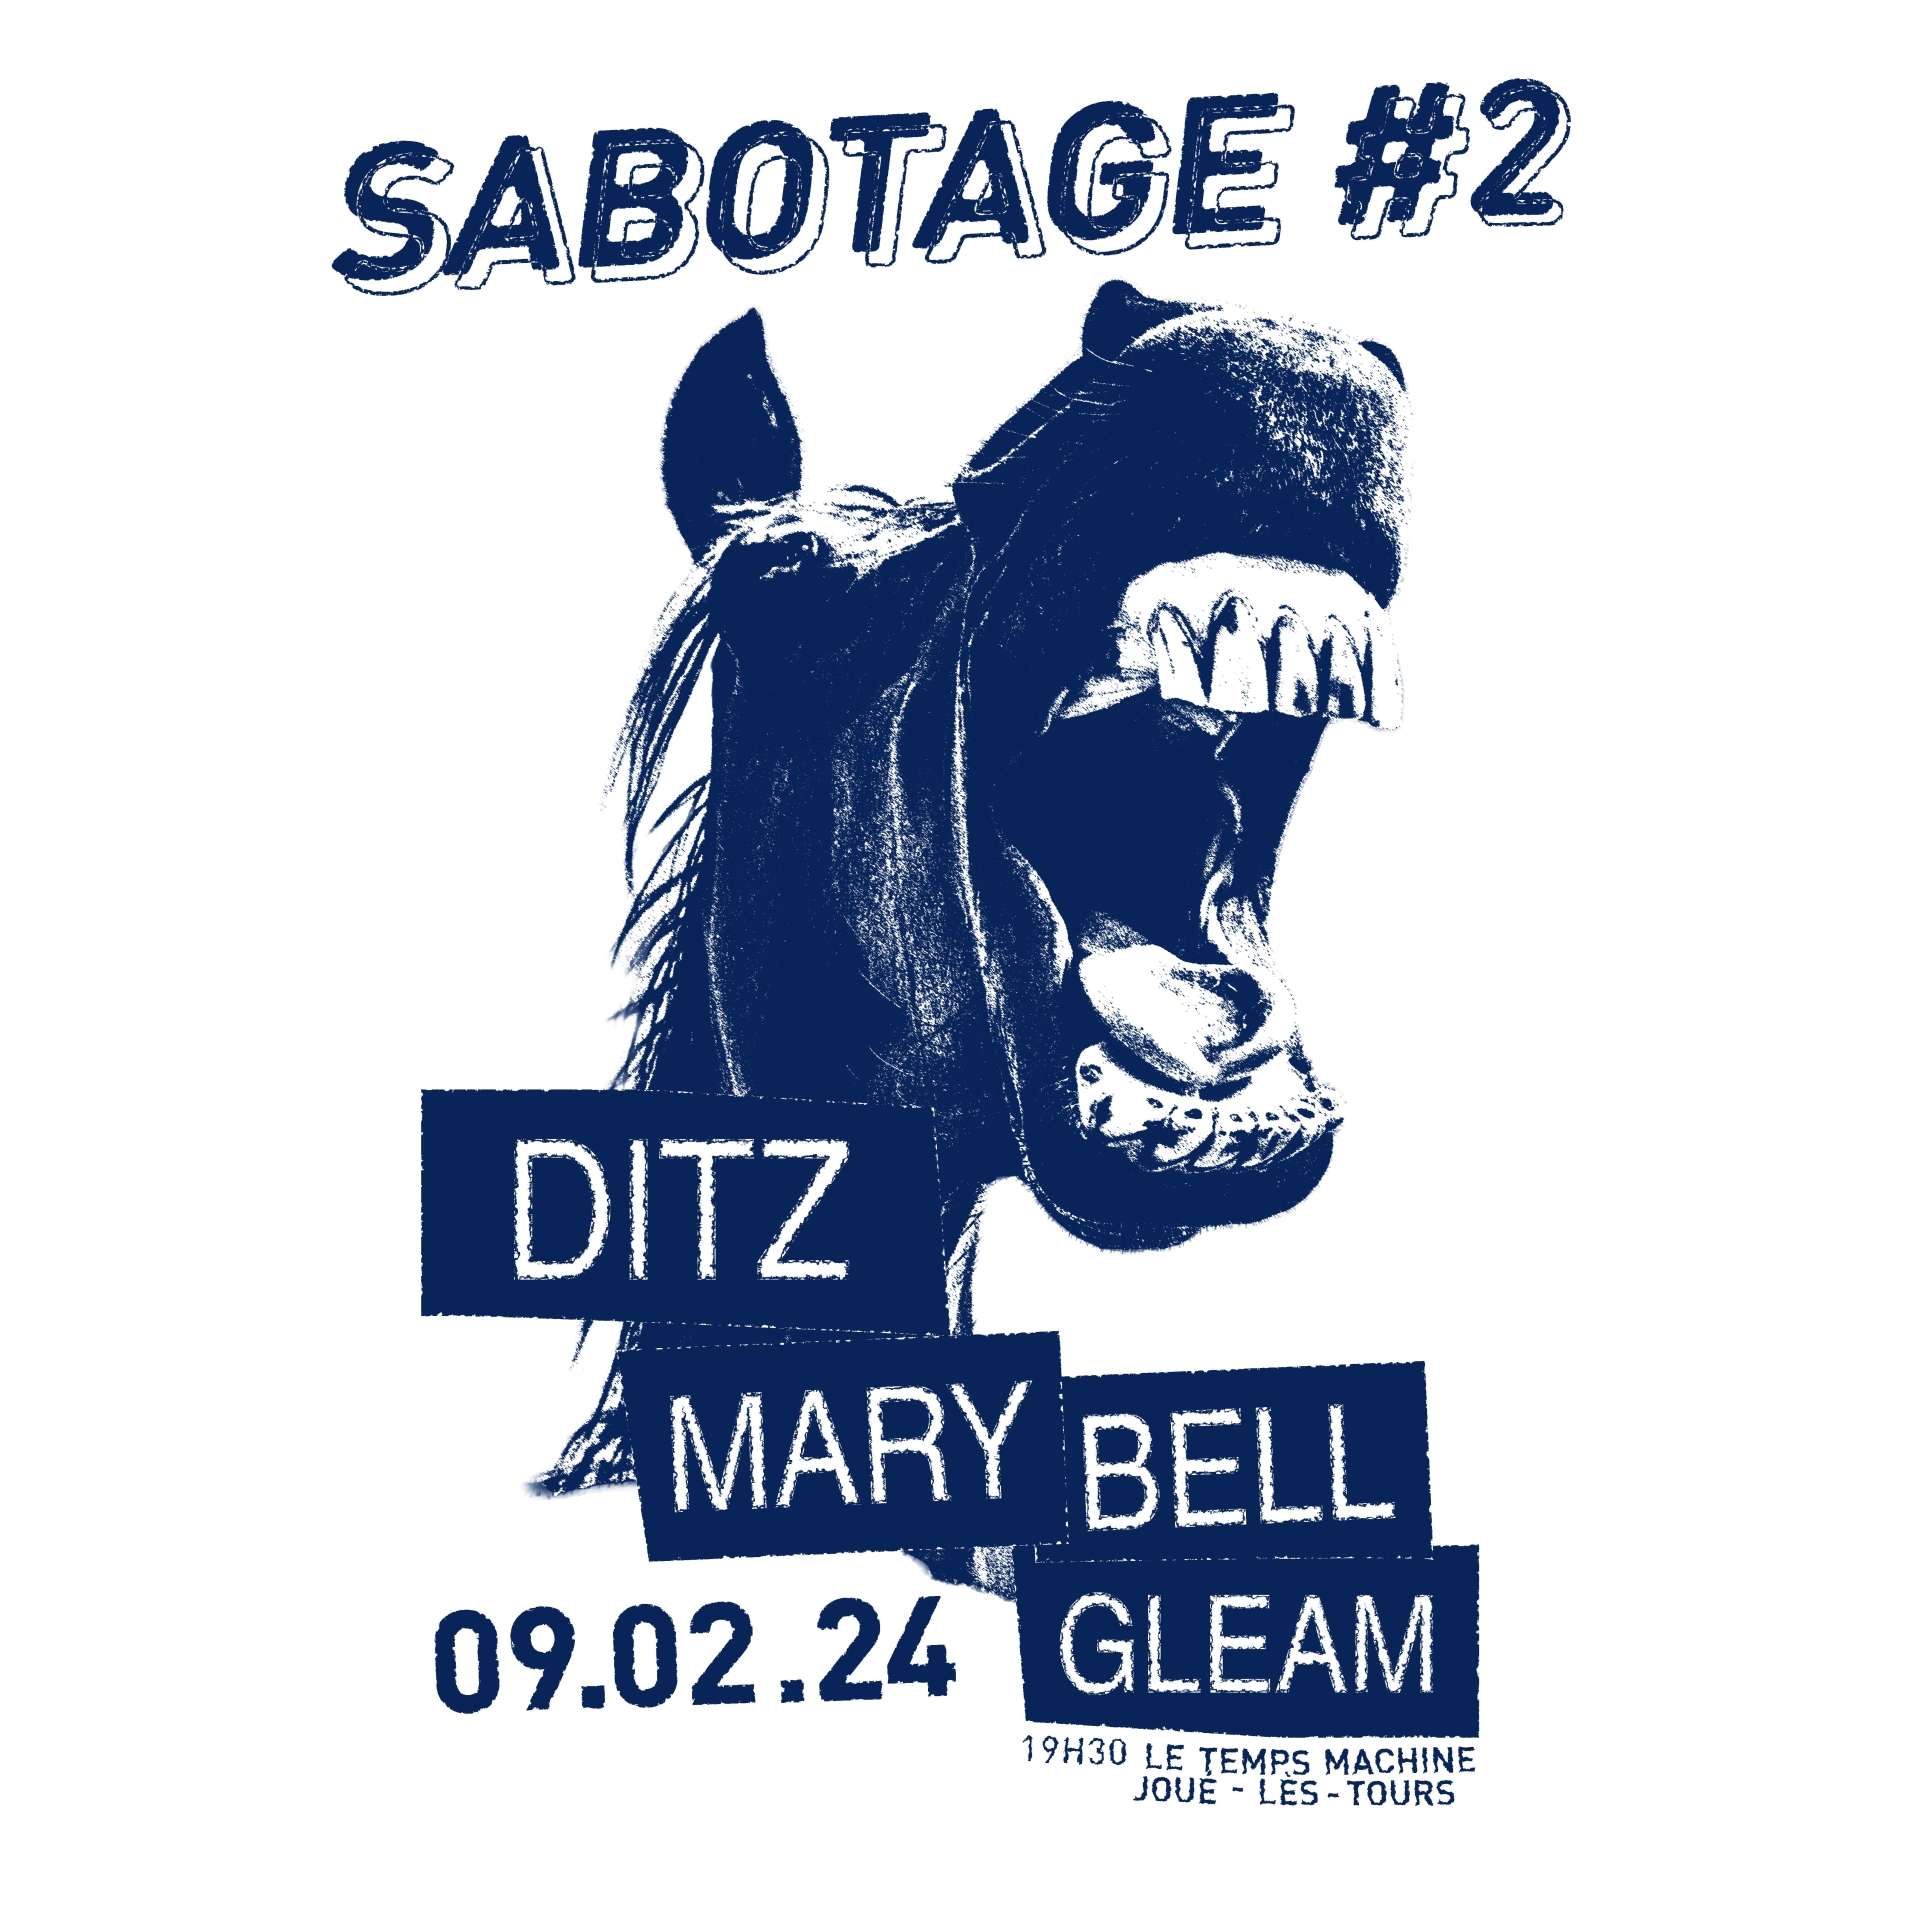 SABOTAGE #2 : DITZ + MARY BELL + GLEAM